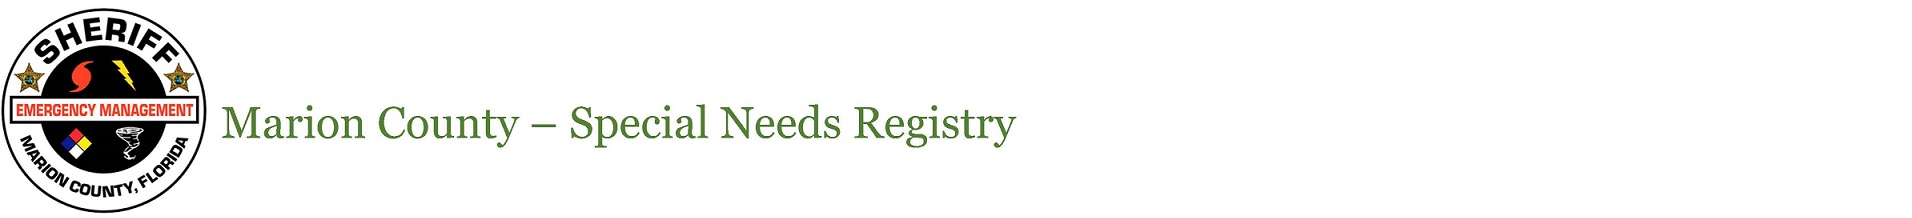 [Marion County - Special Needs Registry] Member Portal banner